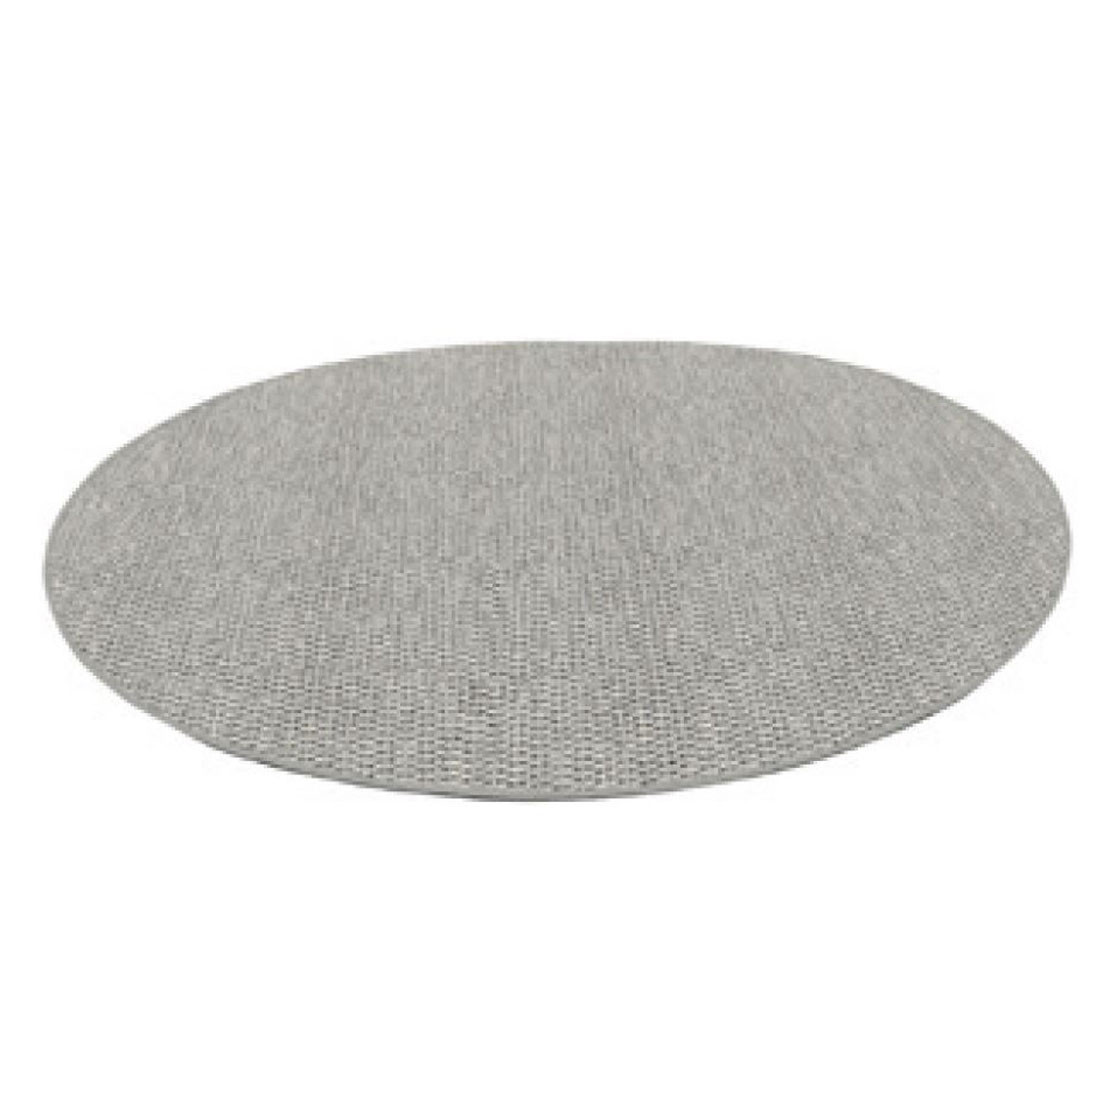 Outdoor rug 200 cm. Round Grey